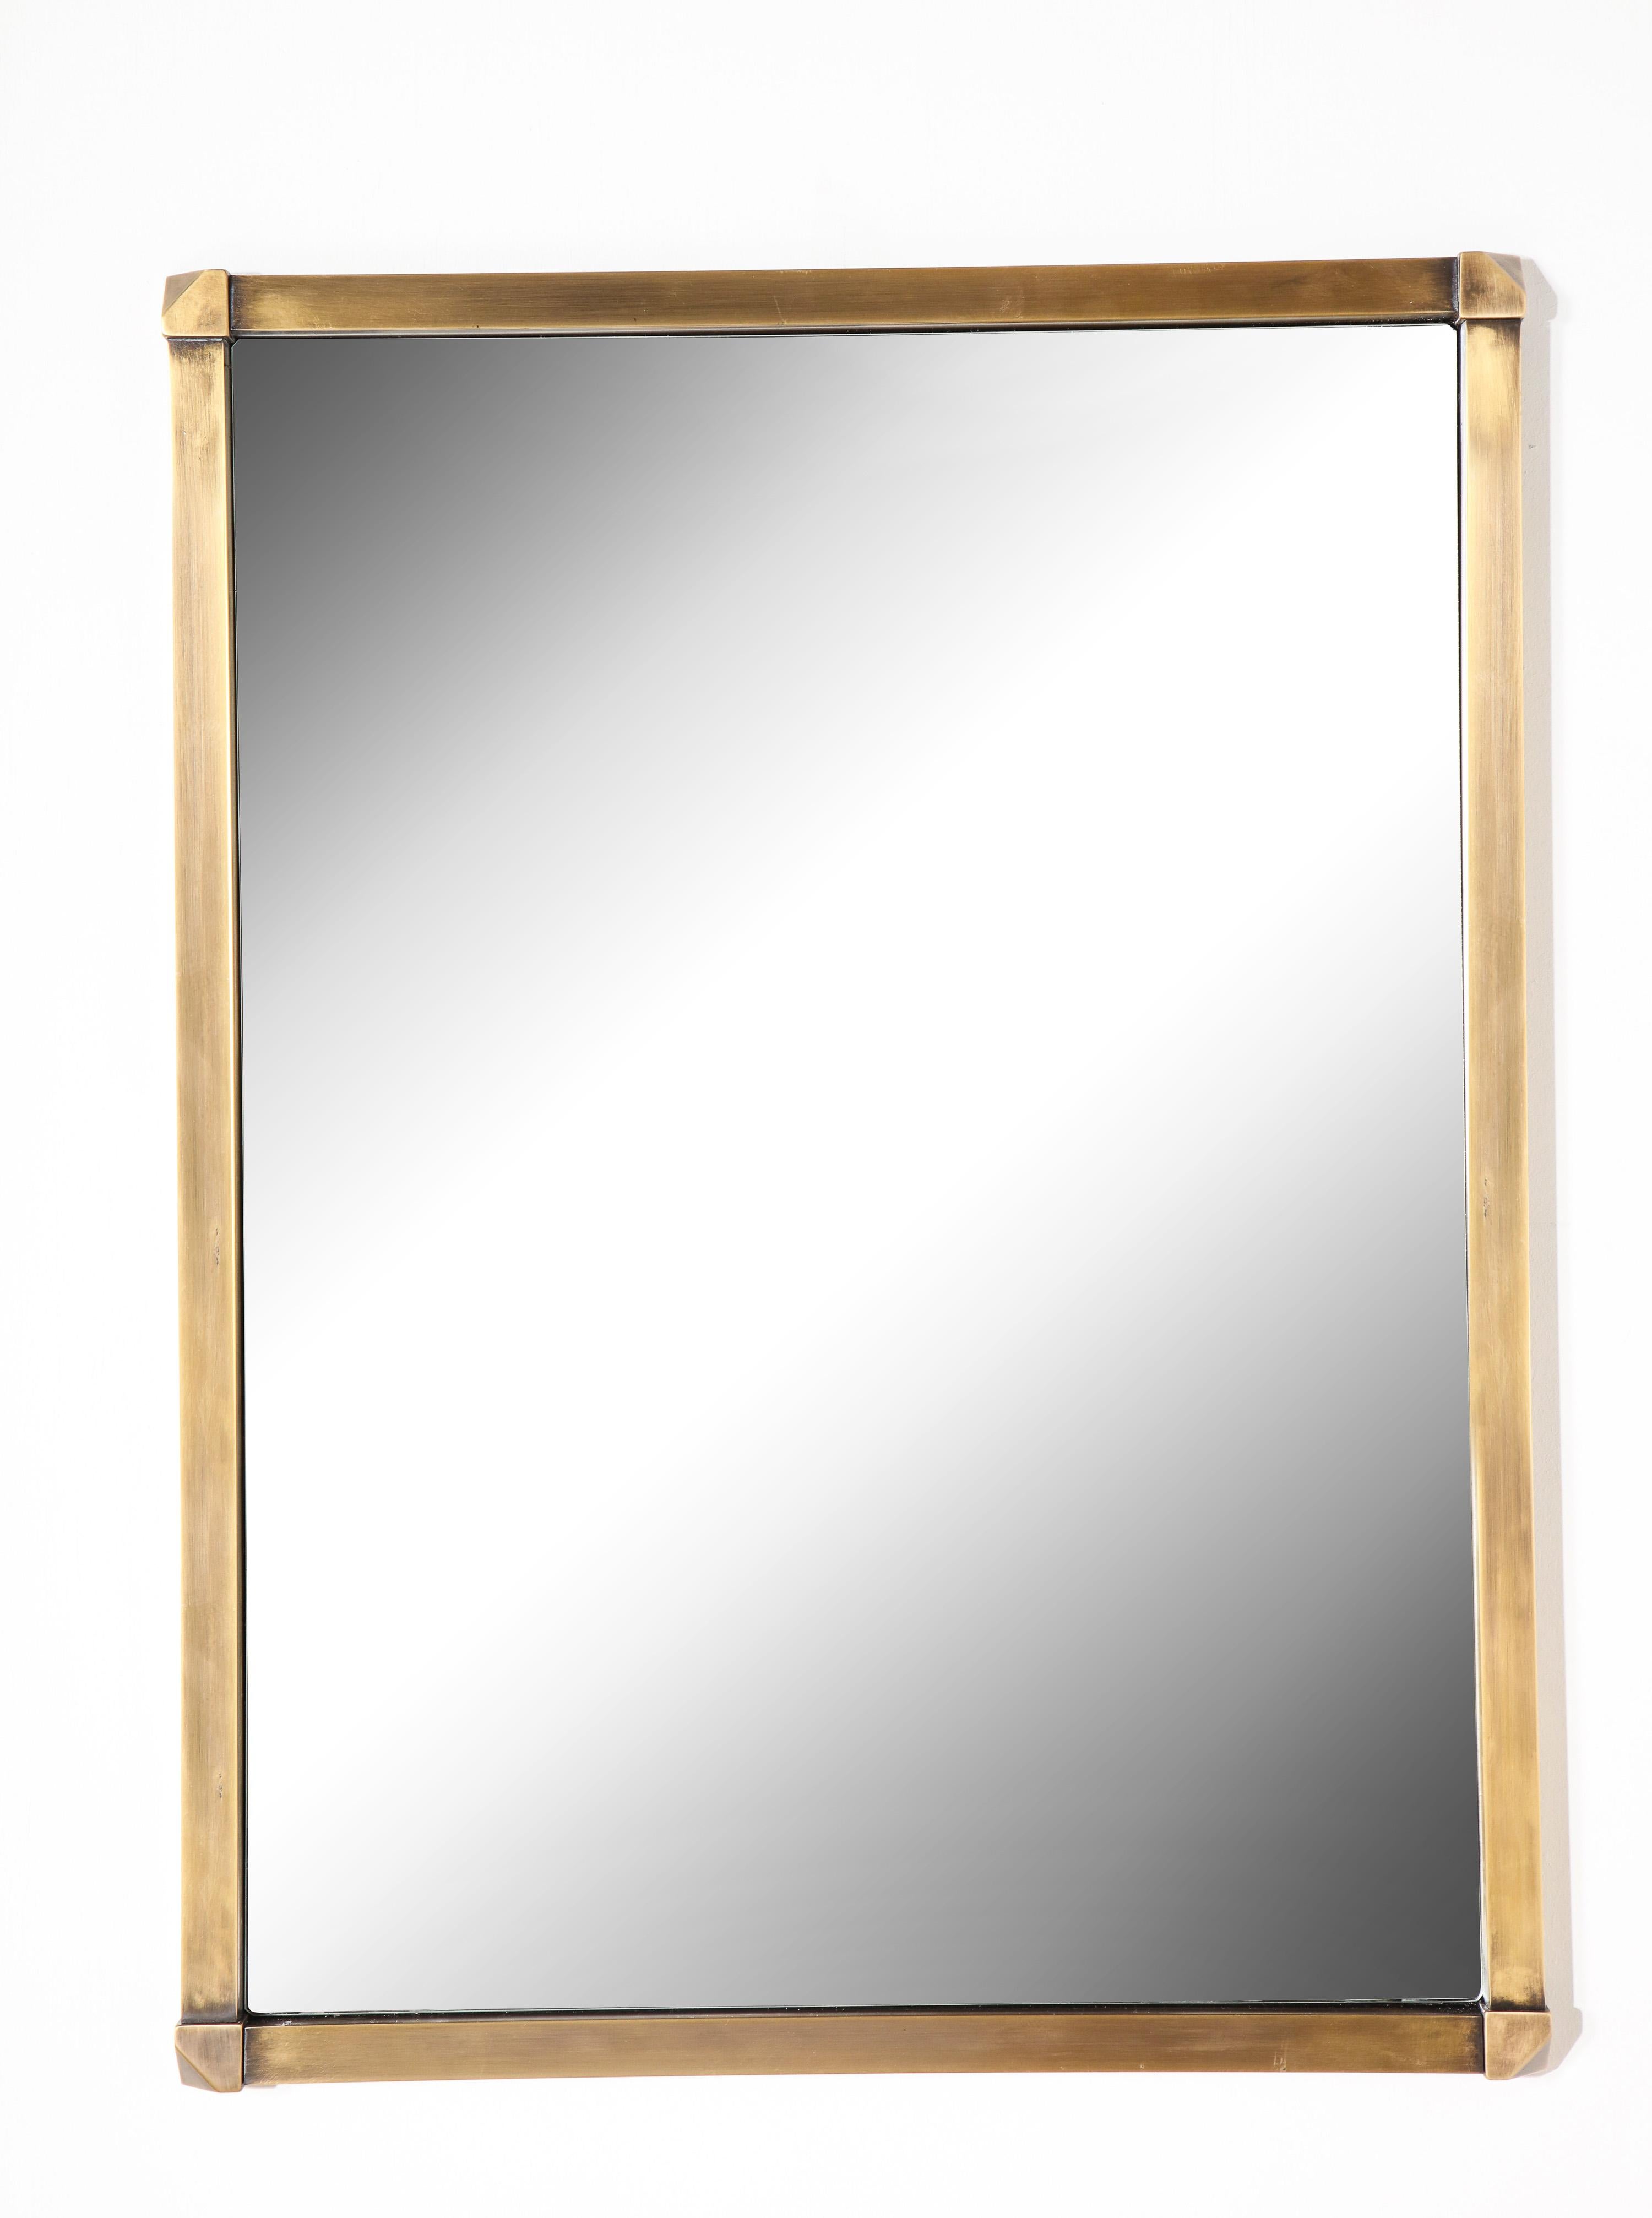 Patinated brass mirror with cubist corner accents by Jansen.